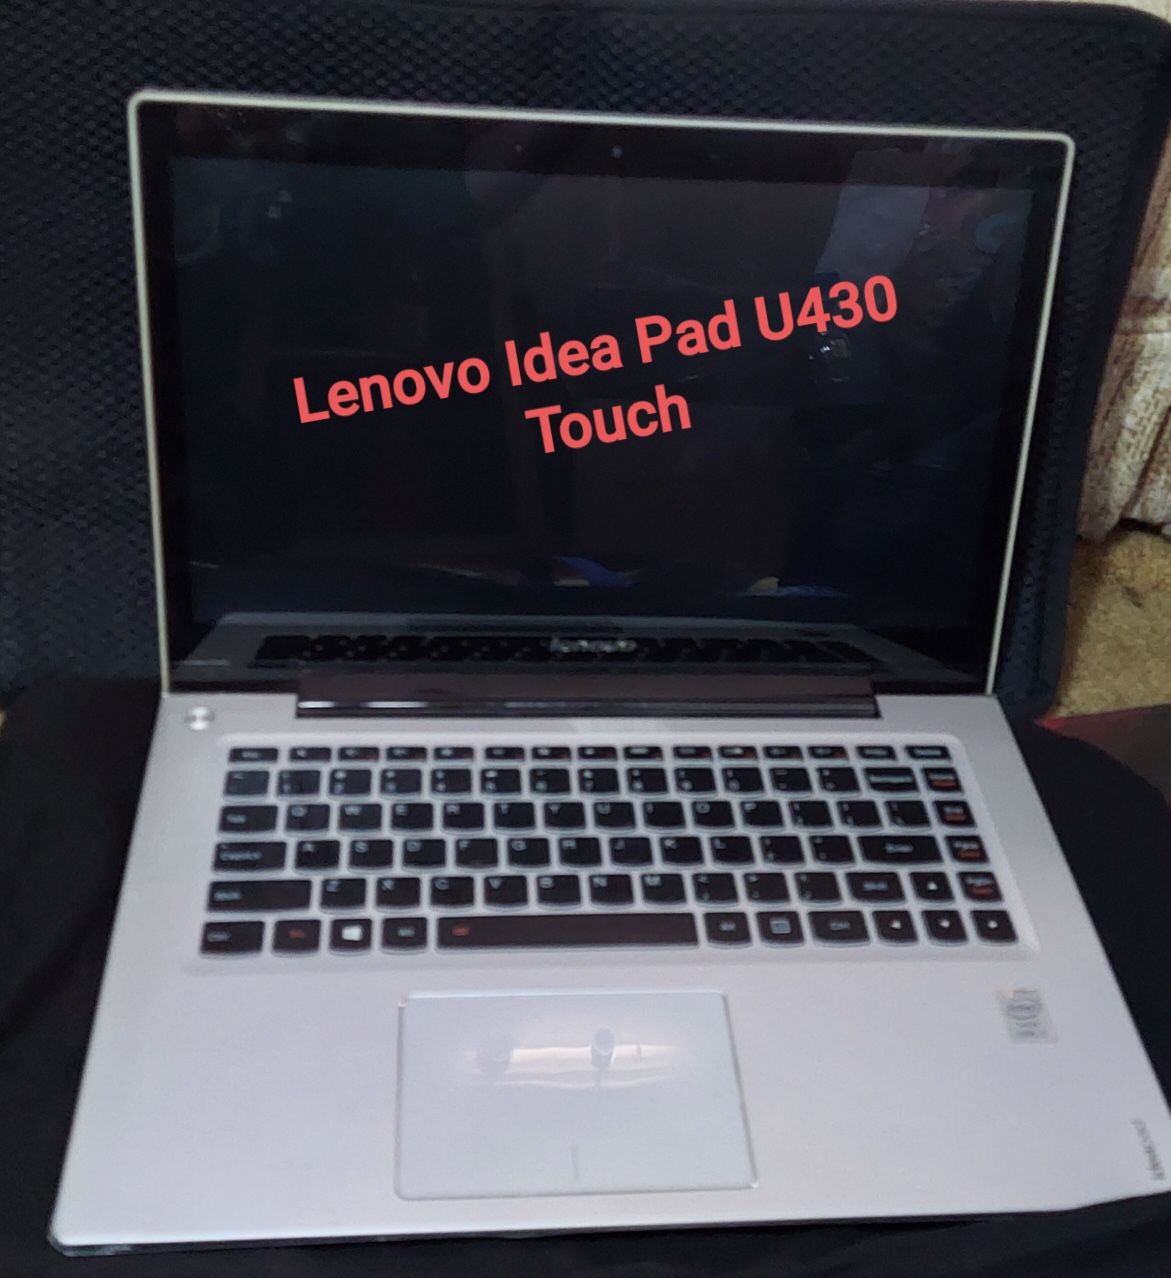 Lenovo Ideapad U430 Touchscreen Laptop